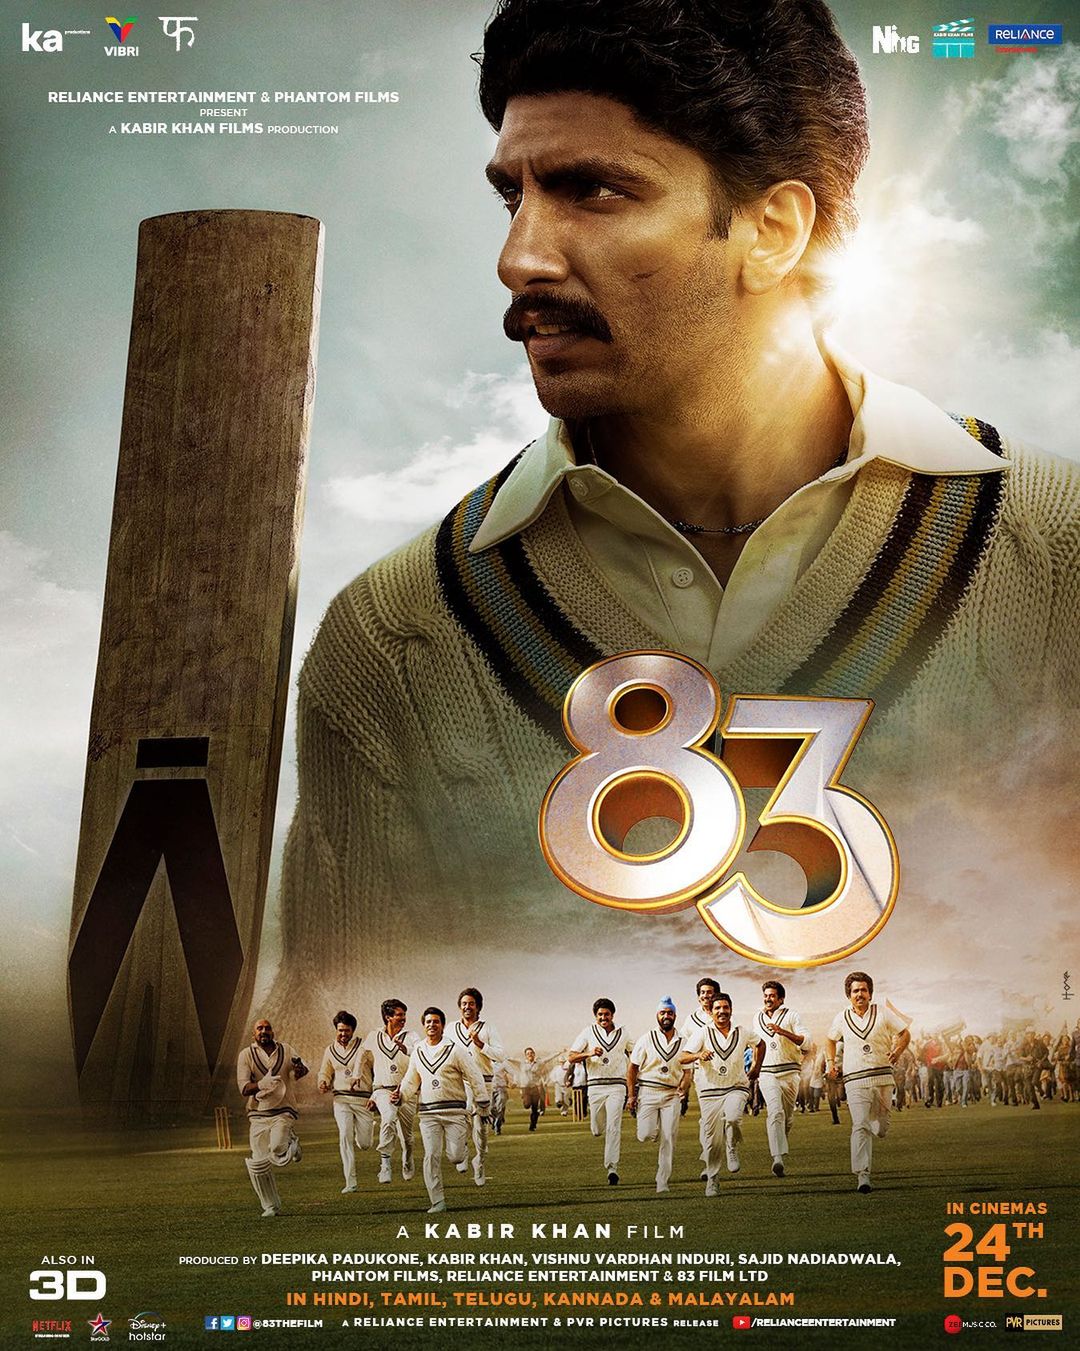 83 Theatrical Release Poster featuring Ranveer Singh